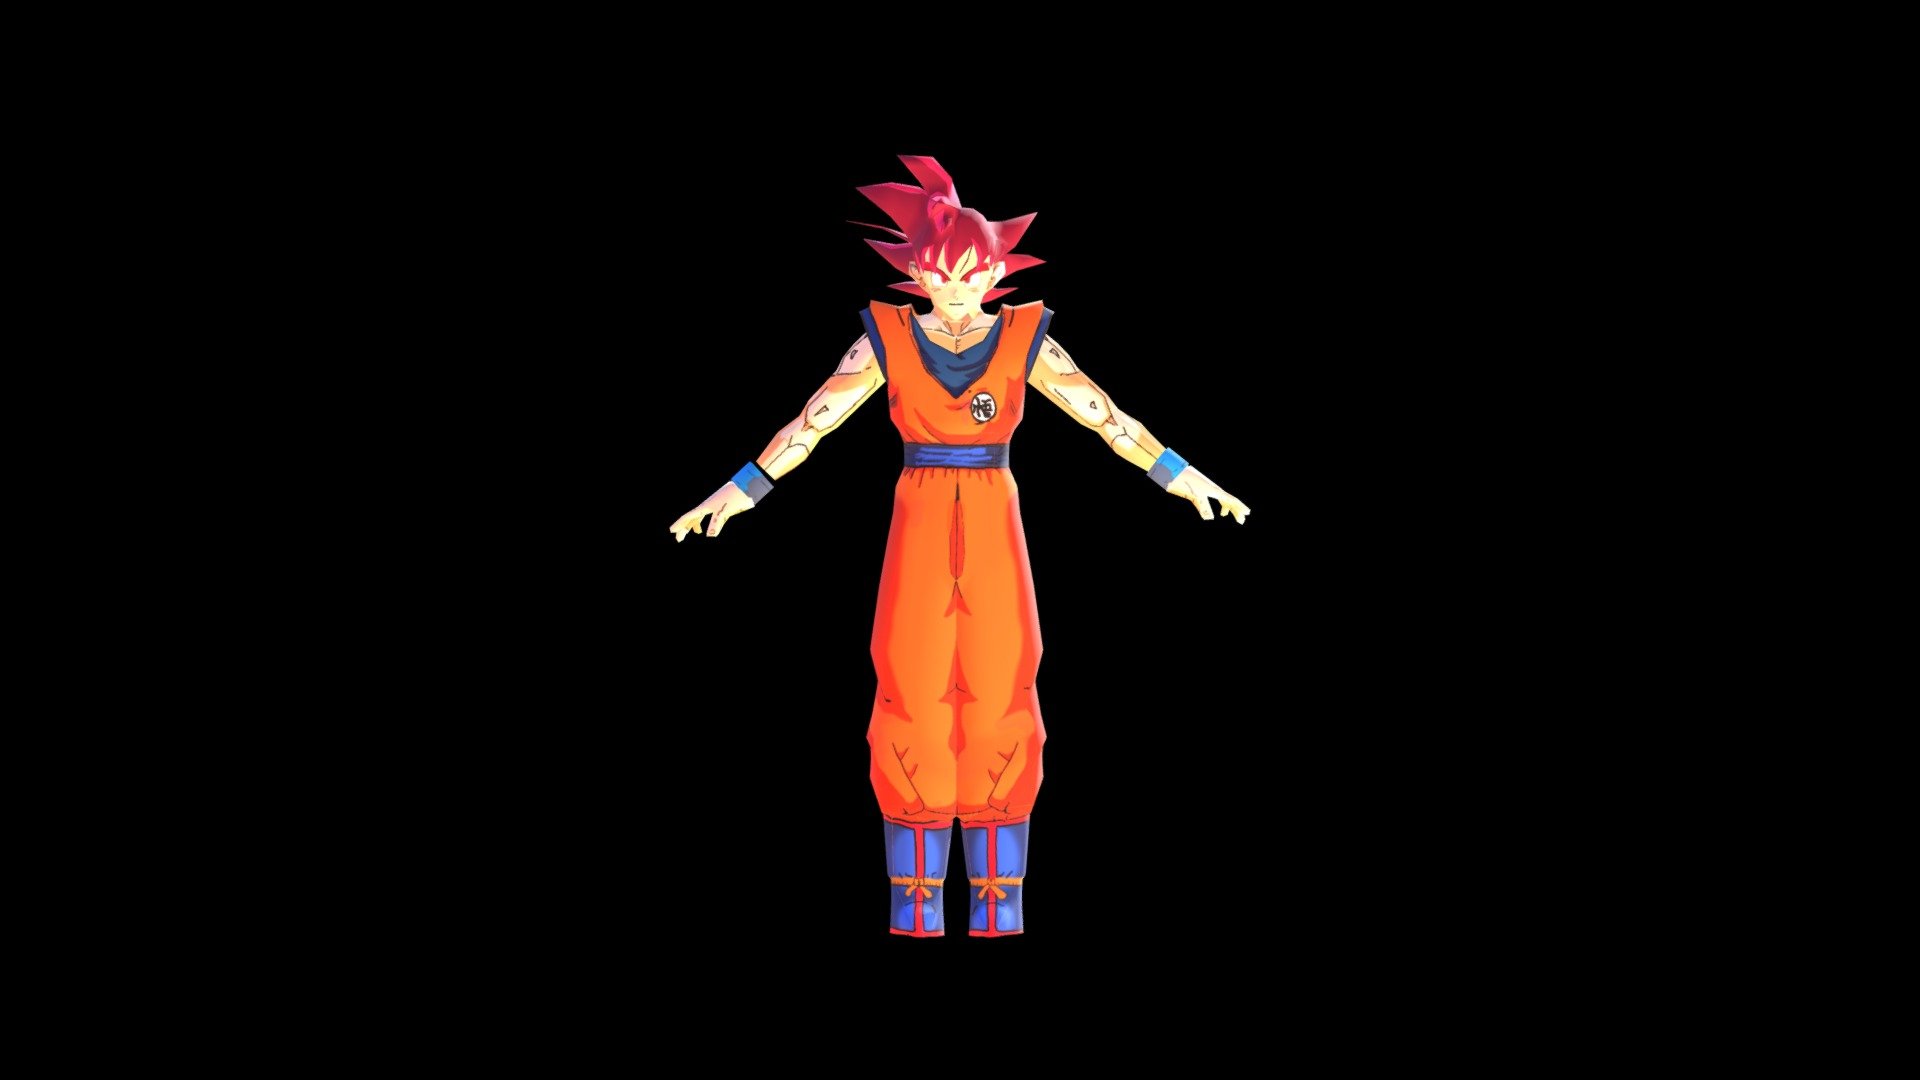 Stream Goku Super Saiyan God 3 custom OST by MKS